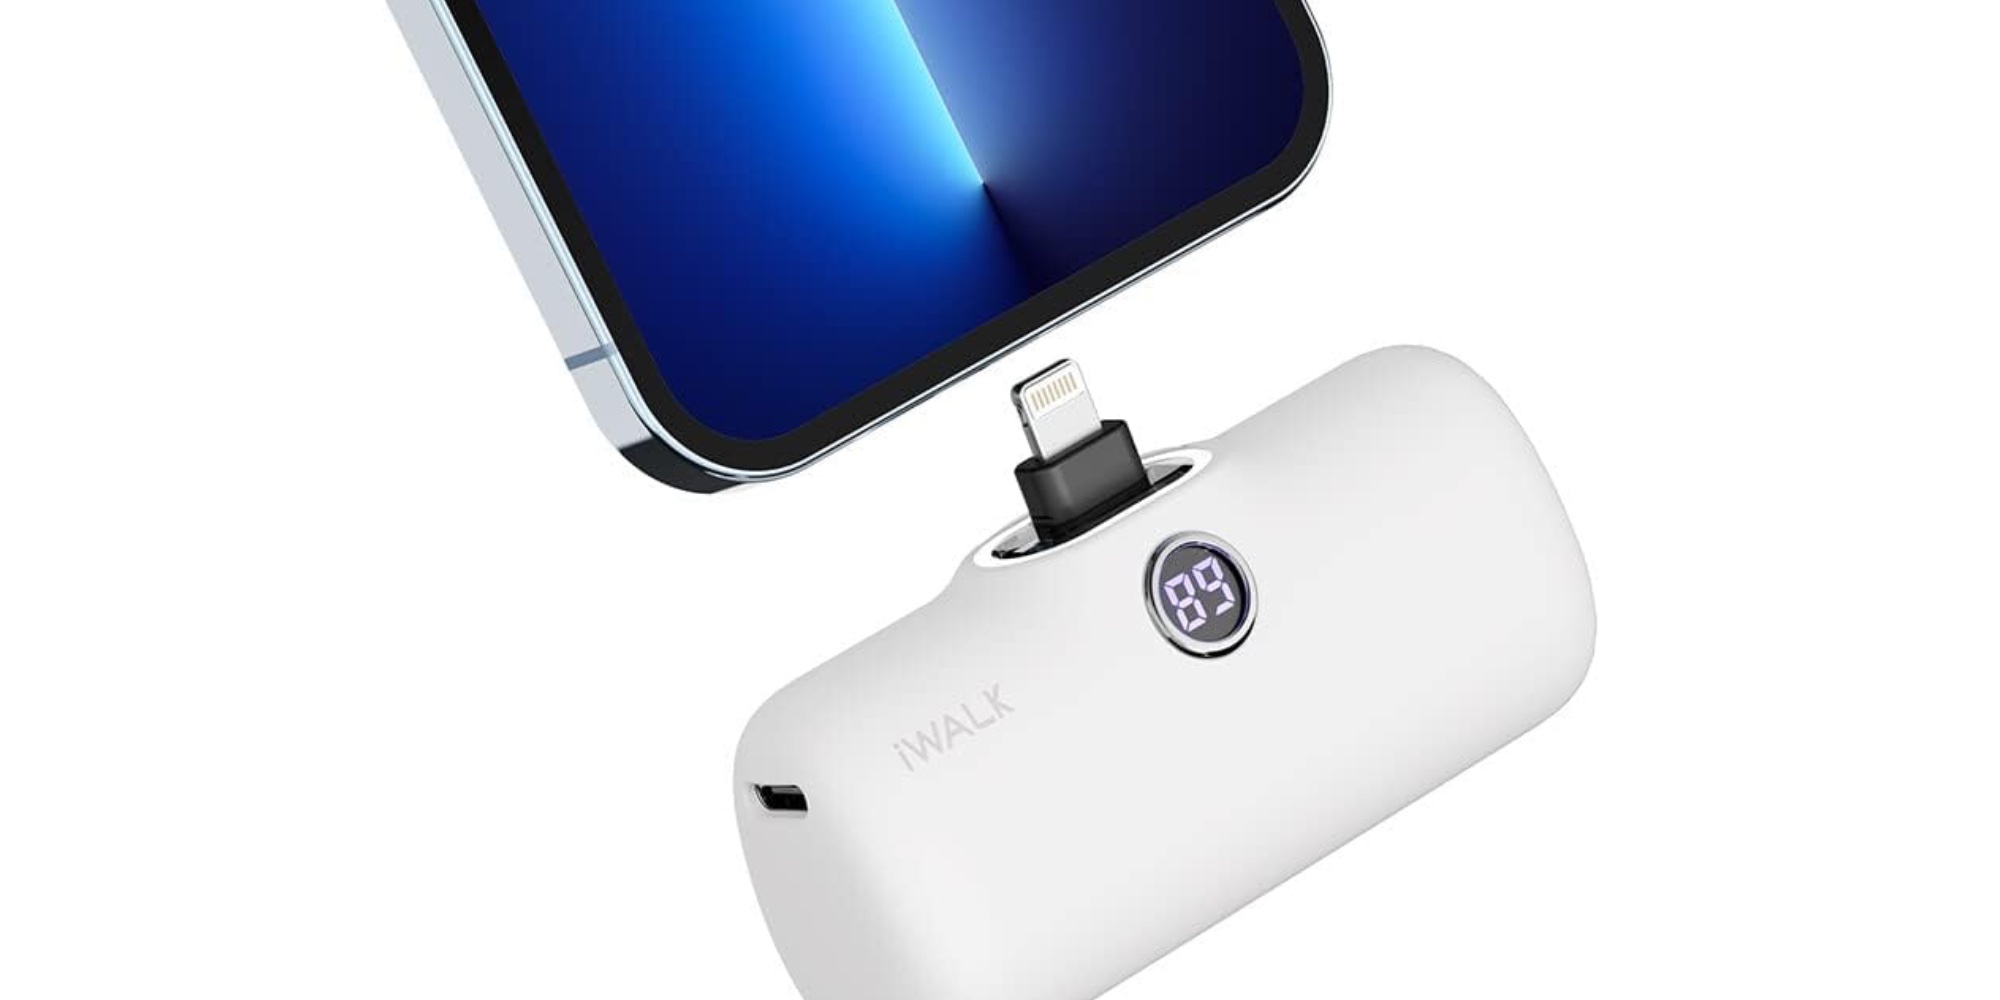 Smartphone Accessories: iWALK LinkPod Lightning Power Bank $28 (Save 30%),  more